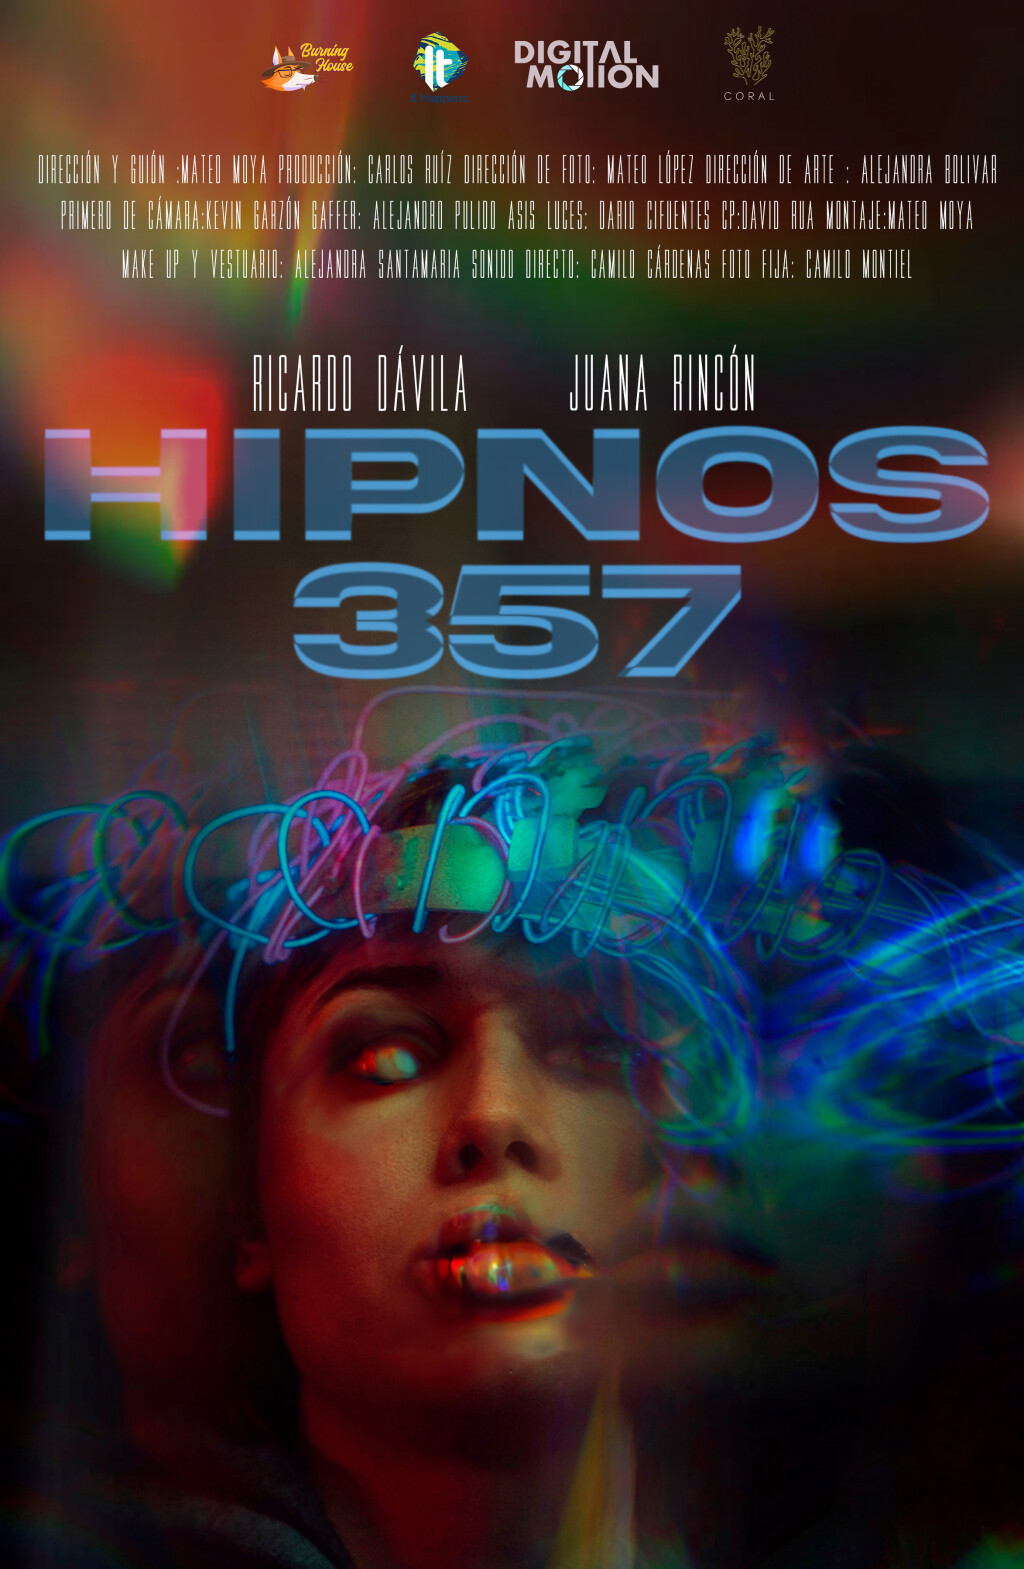 Filmposter for HIPNOS 357